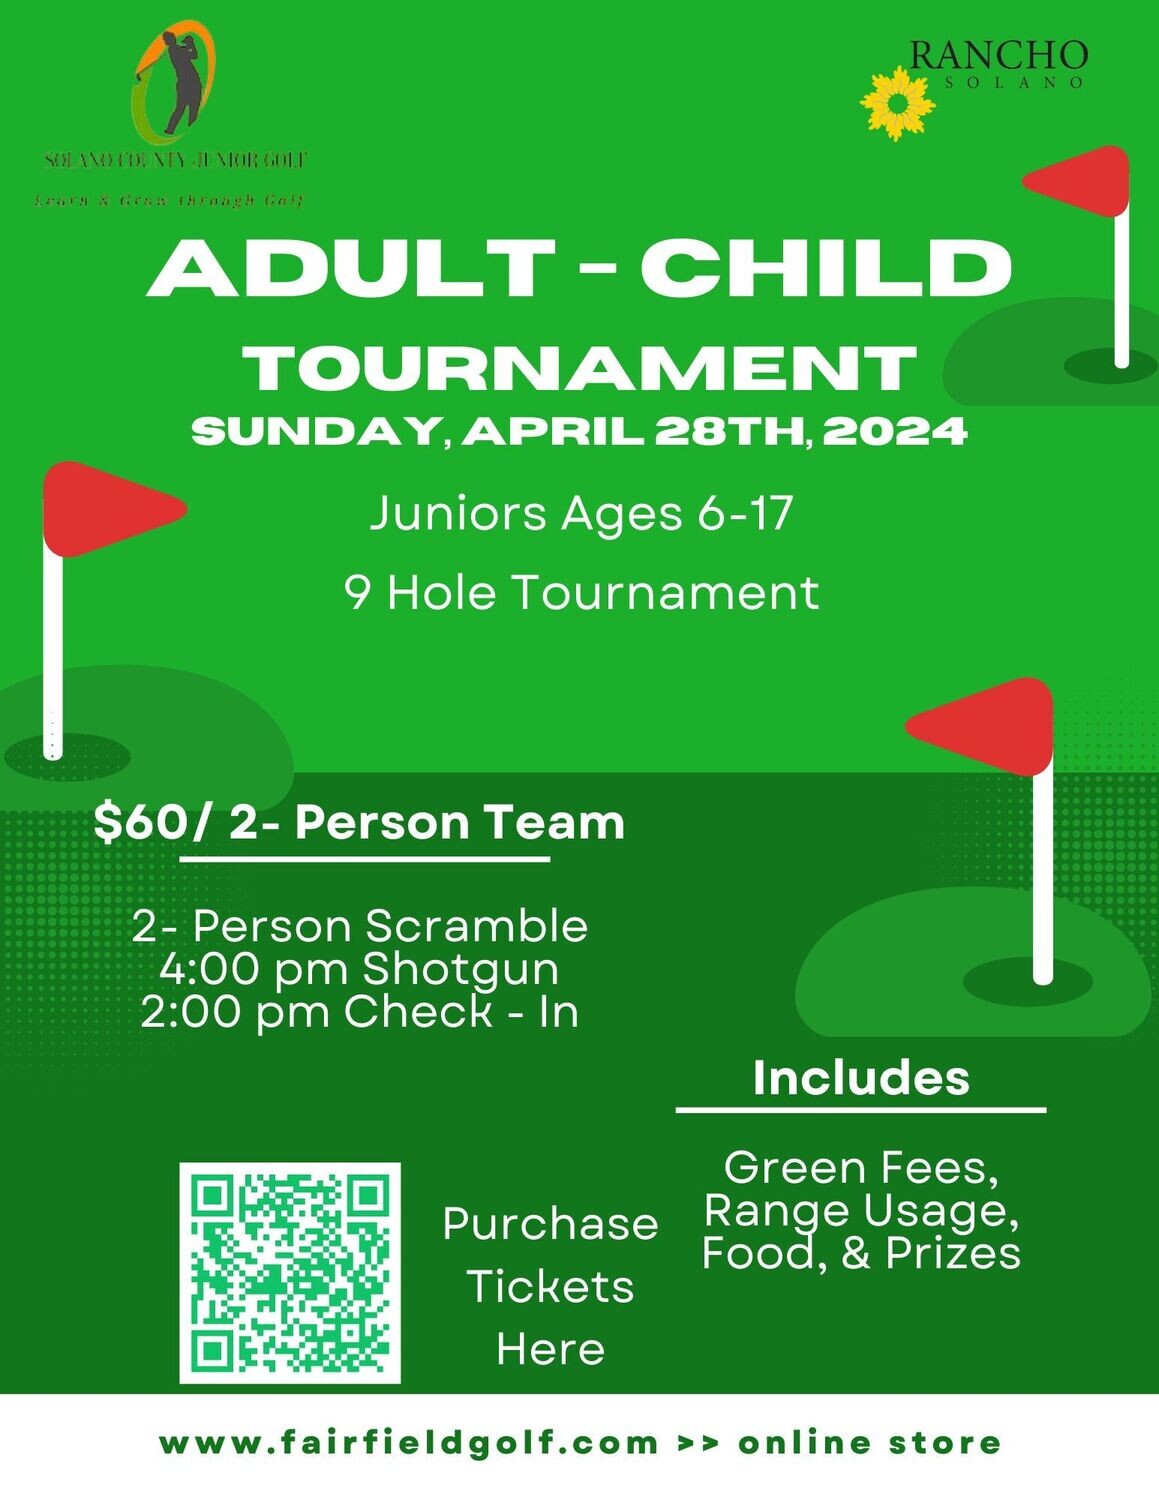 Adult-Child Tournament (9 Holes)